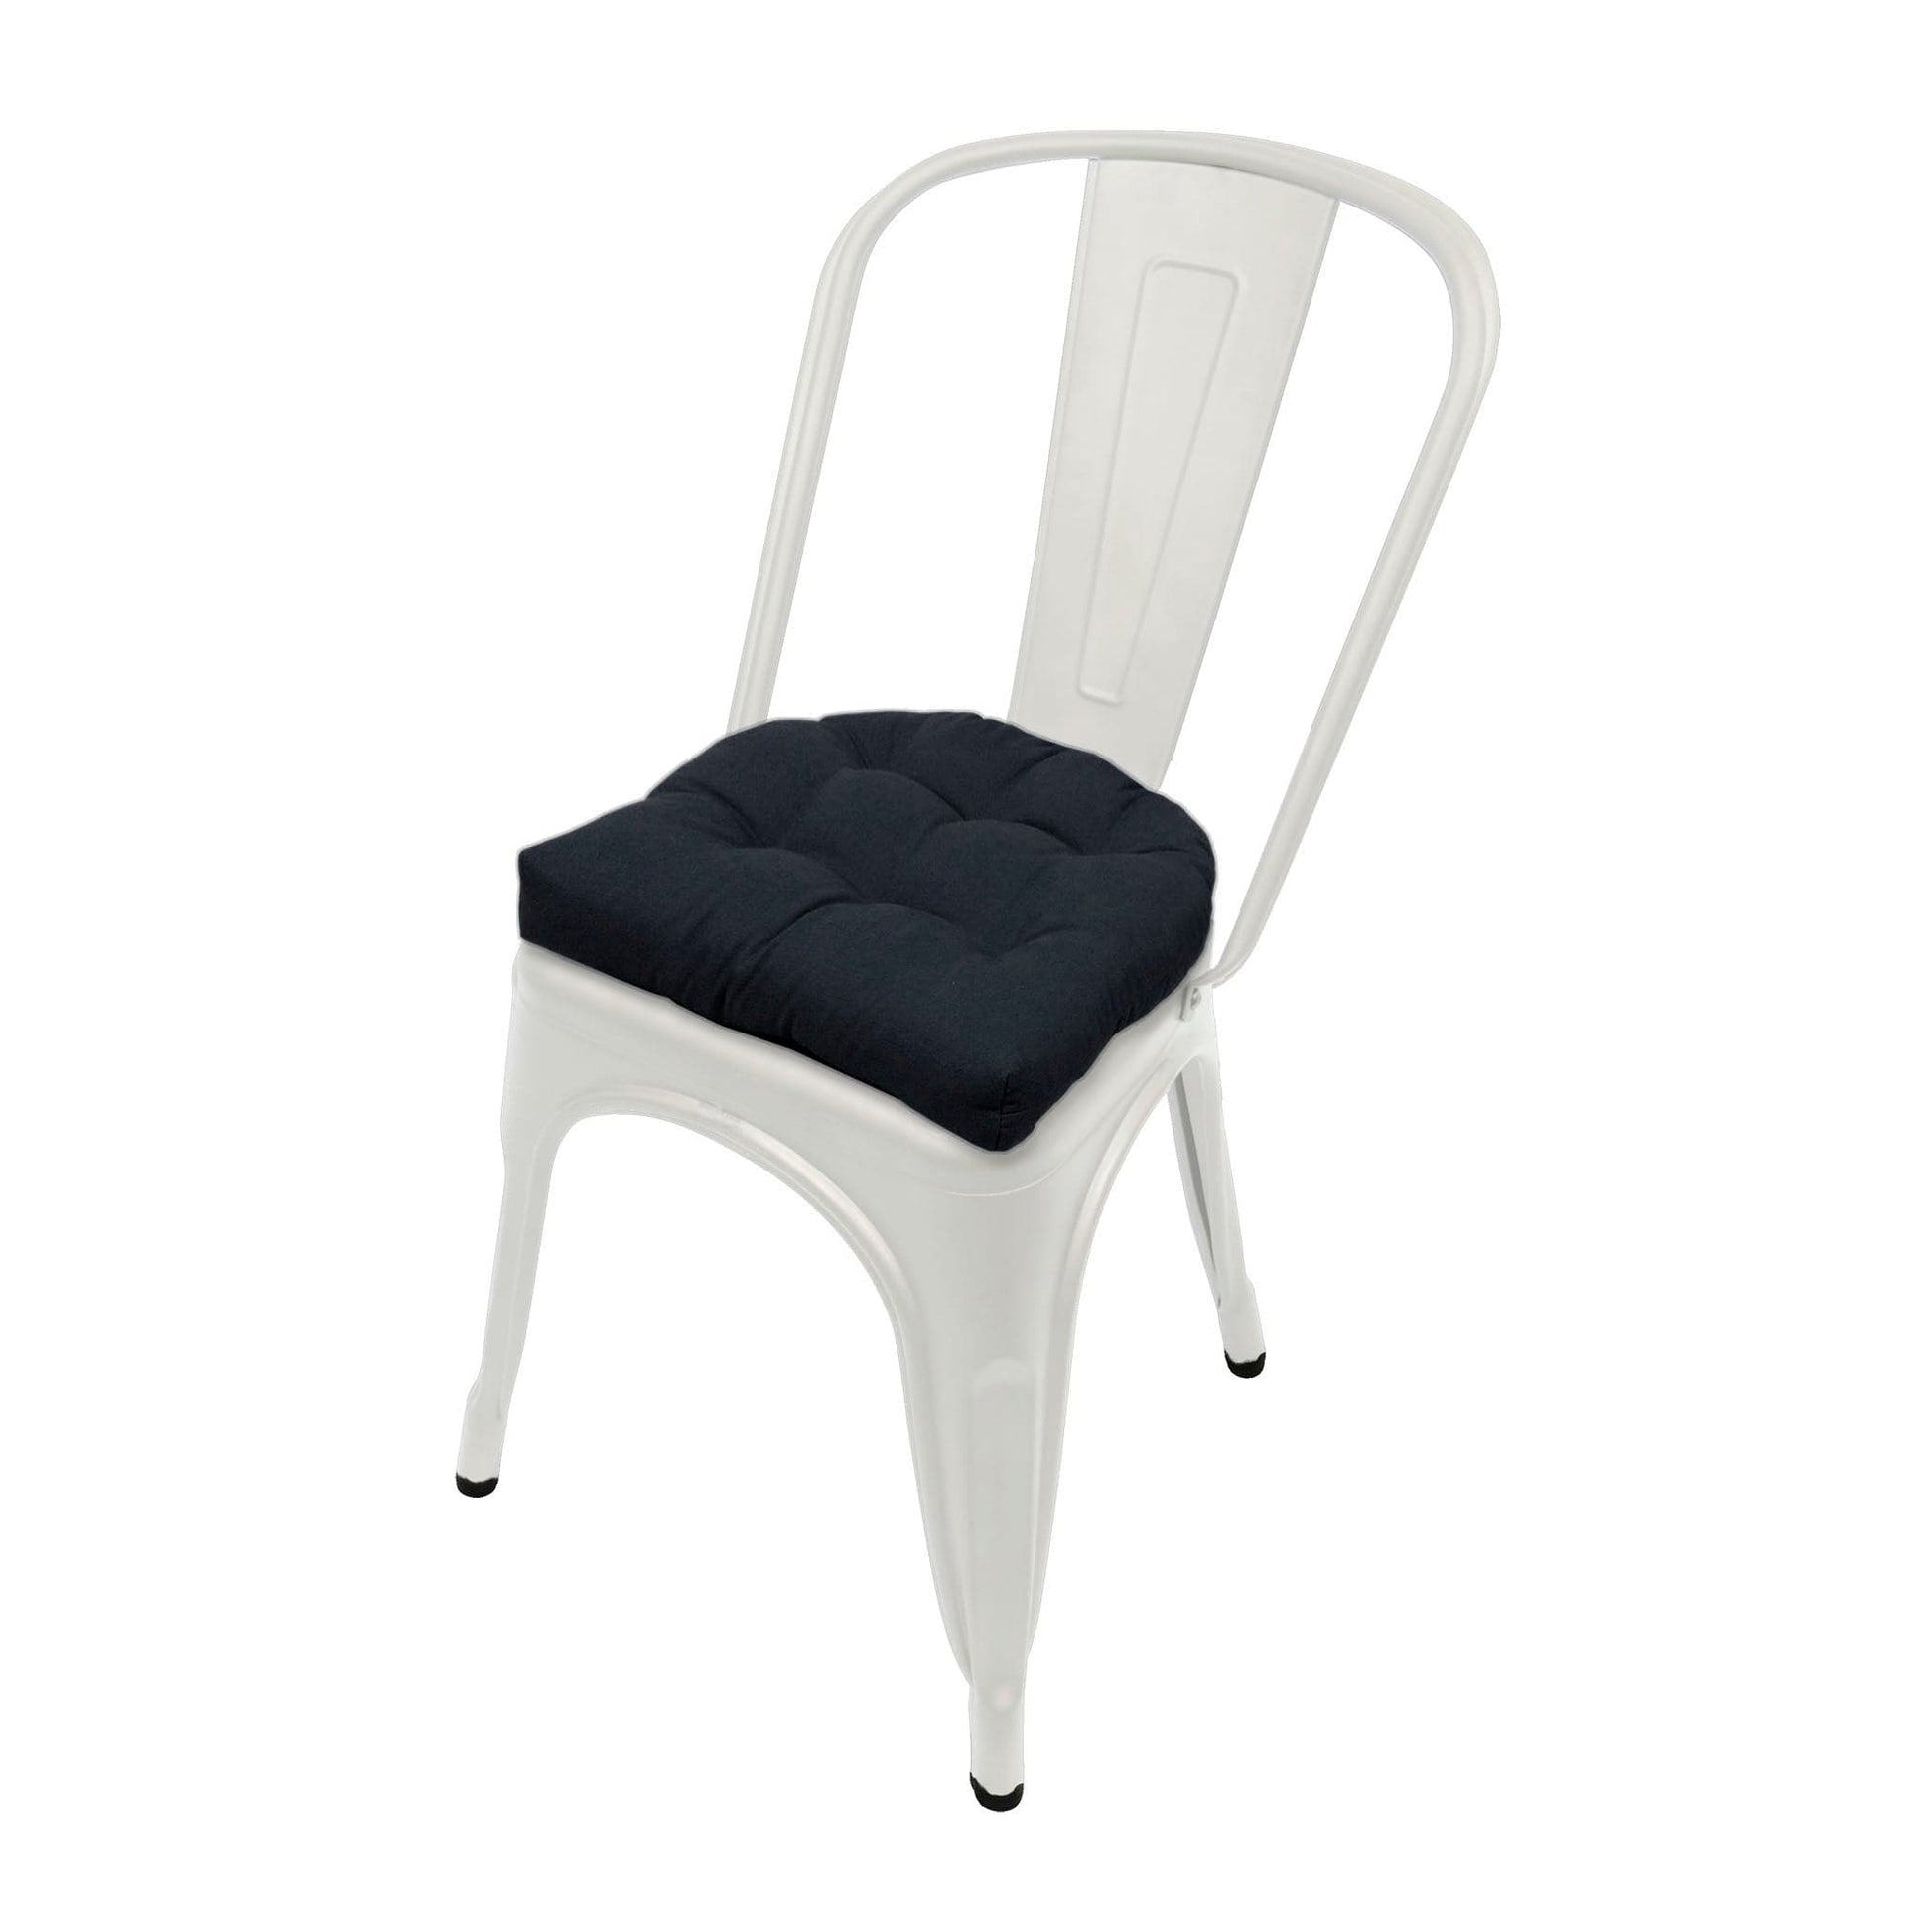 Ticking Stripe Black Industrial Chair Cushion - Reversible, Latex Foam Fill